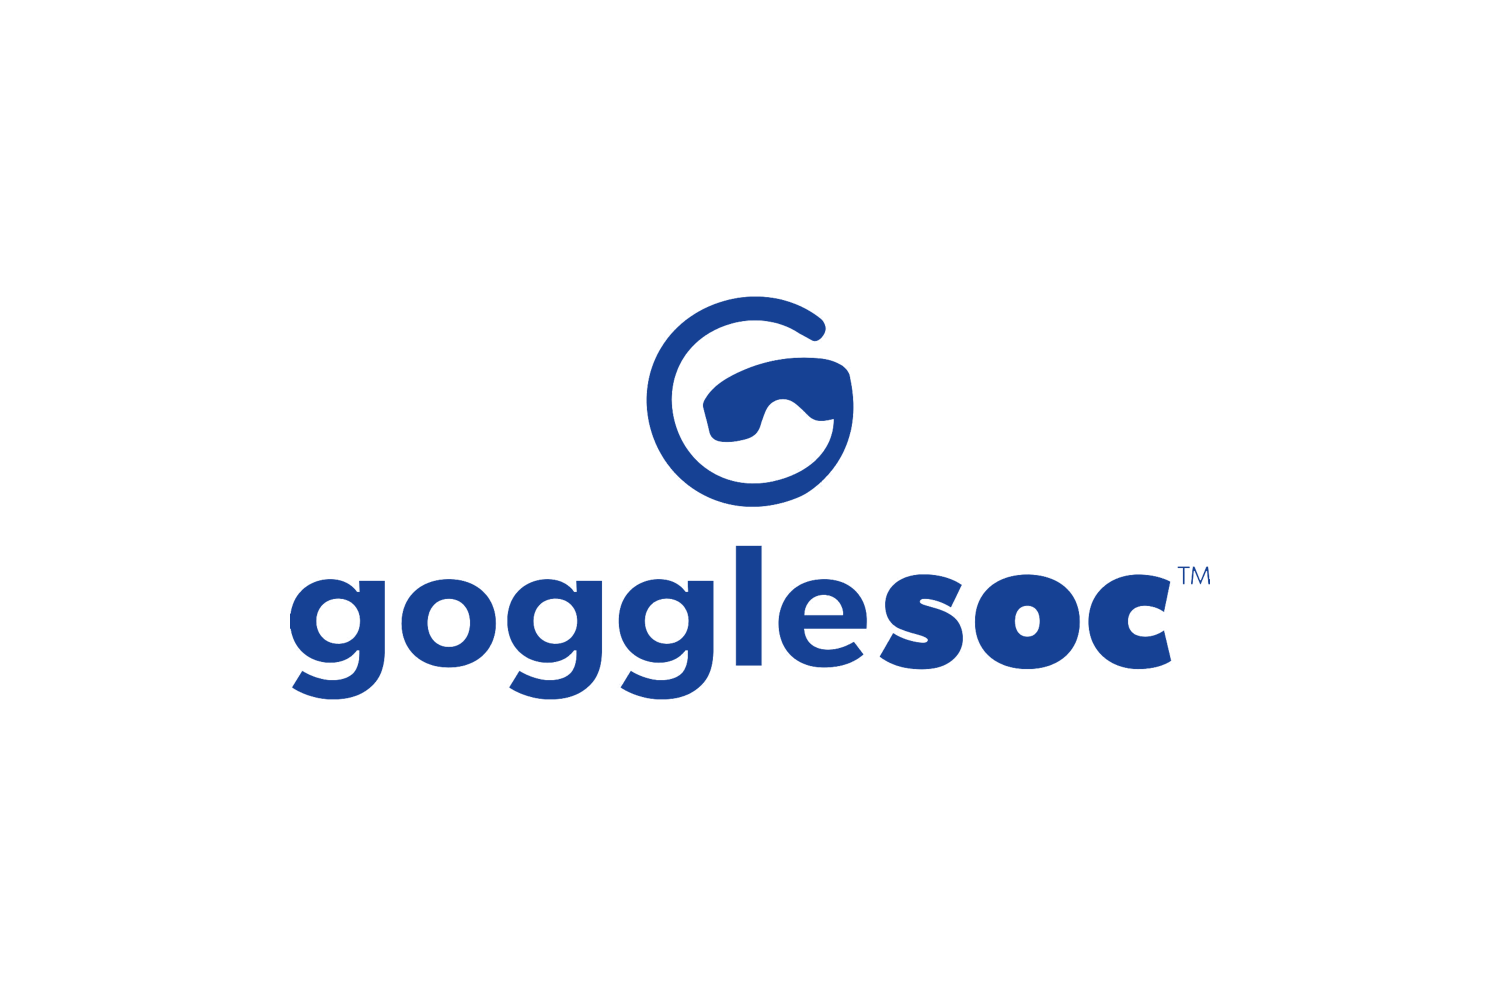 GoogleSoc